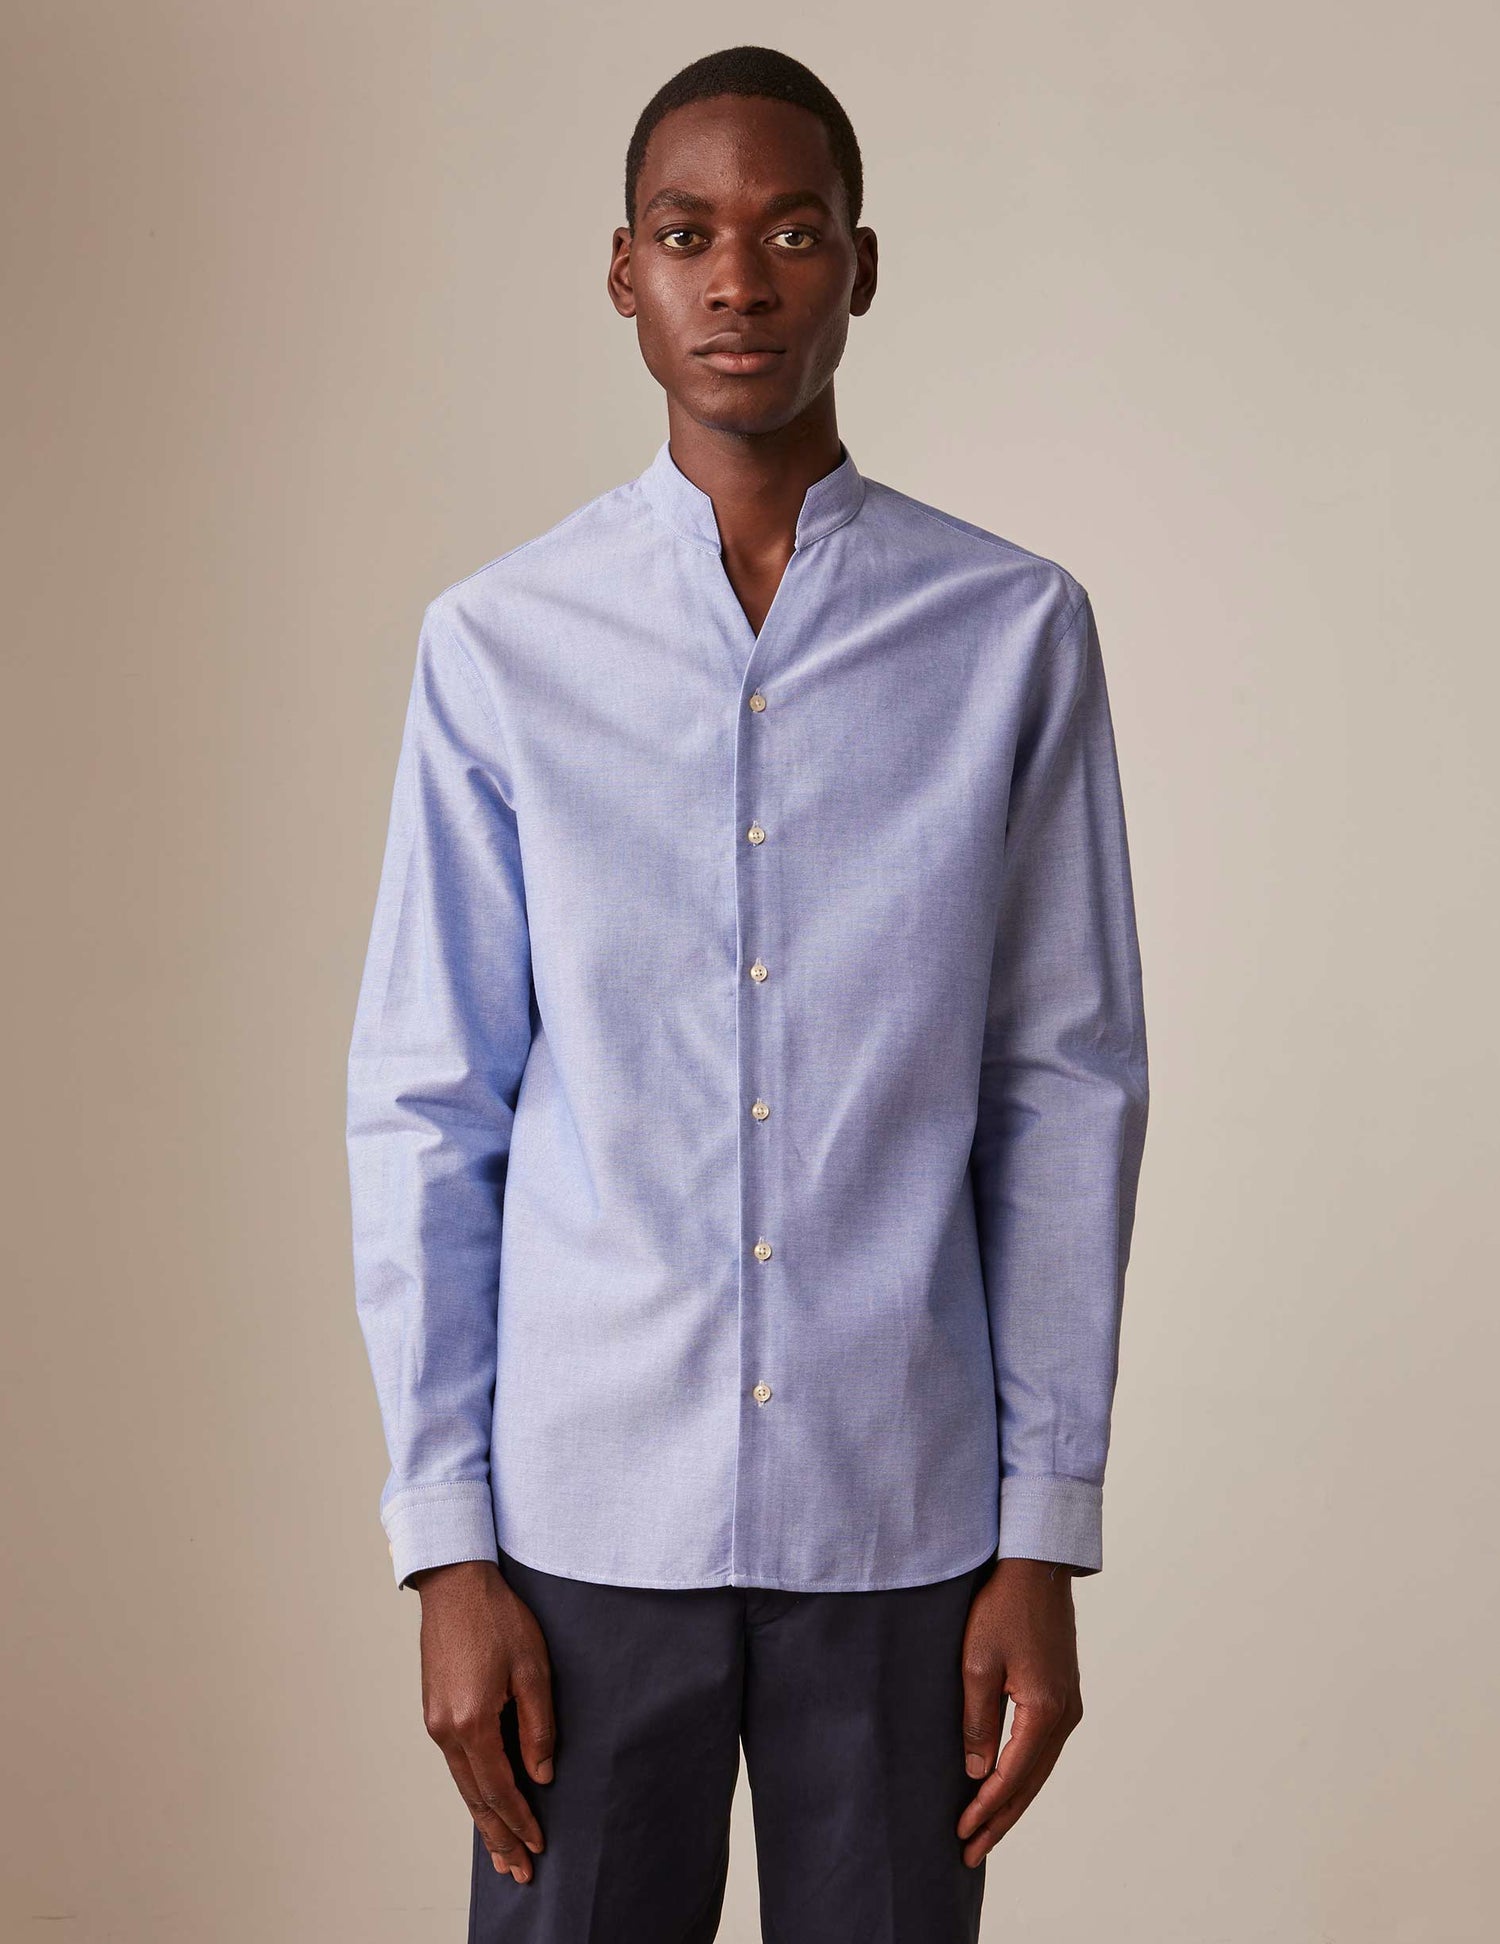 Blue Carl shirt - Oxford - Open straight Collar#3